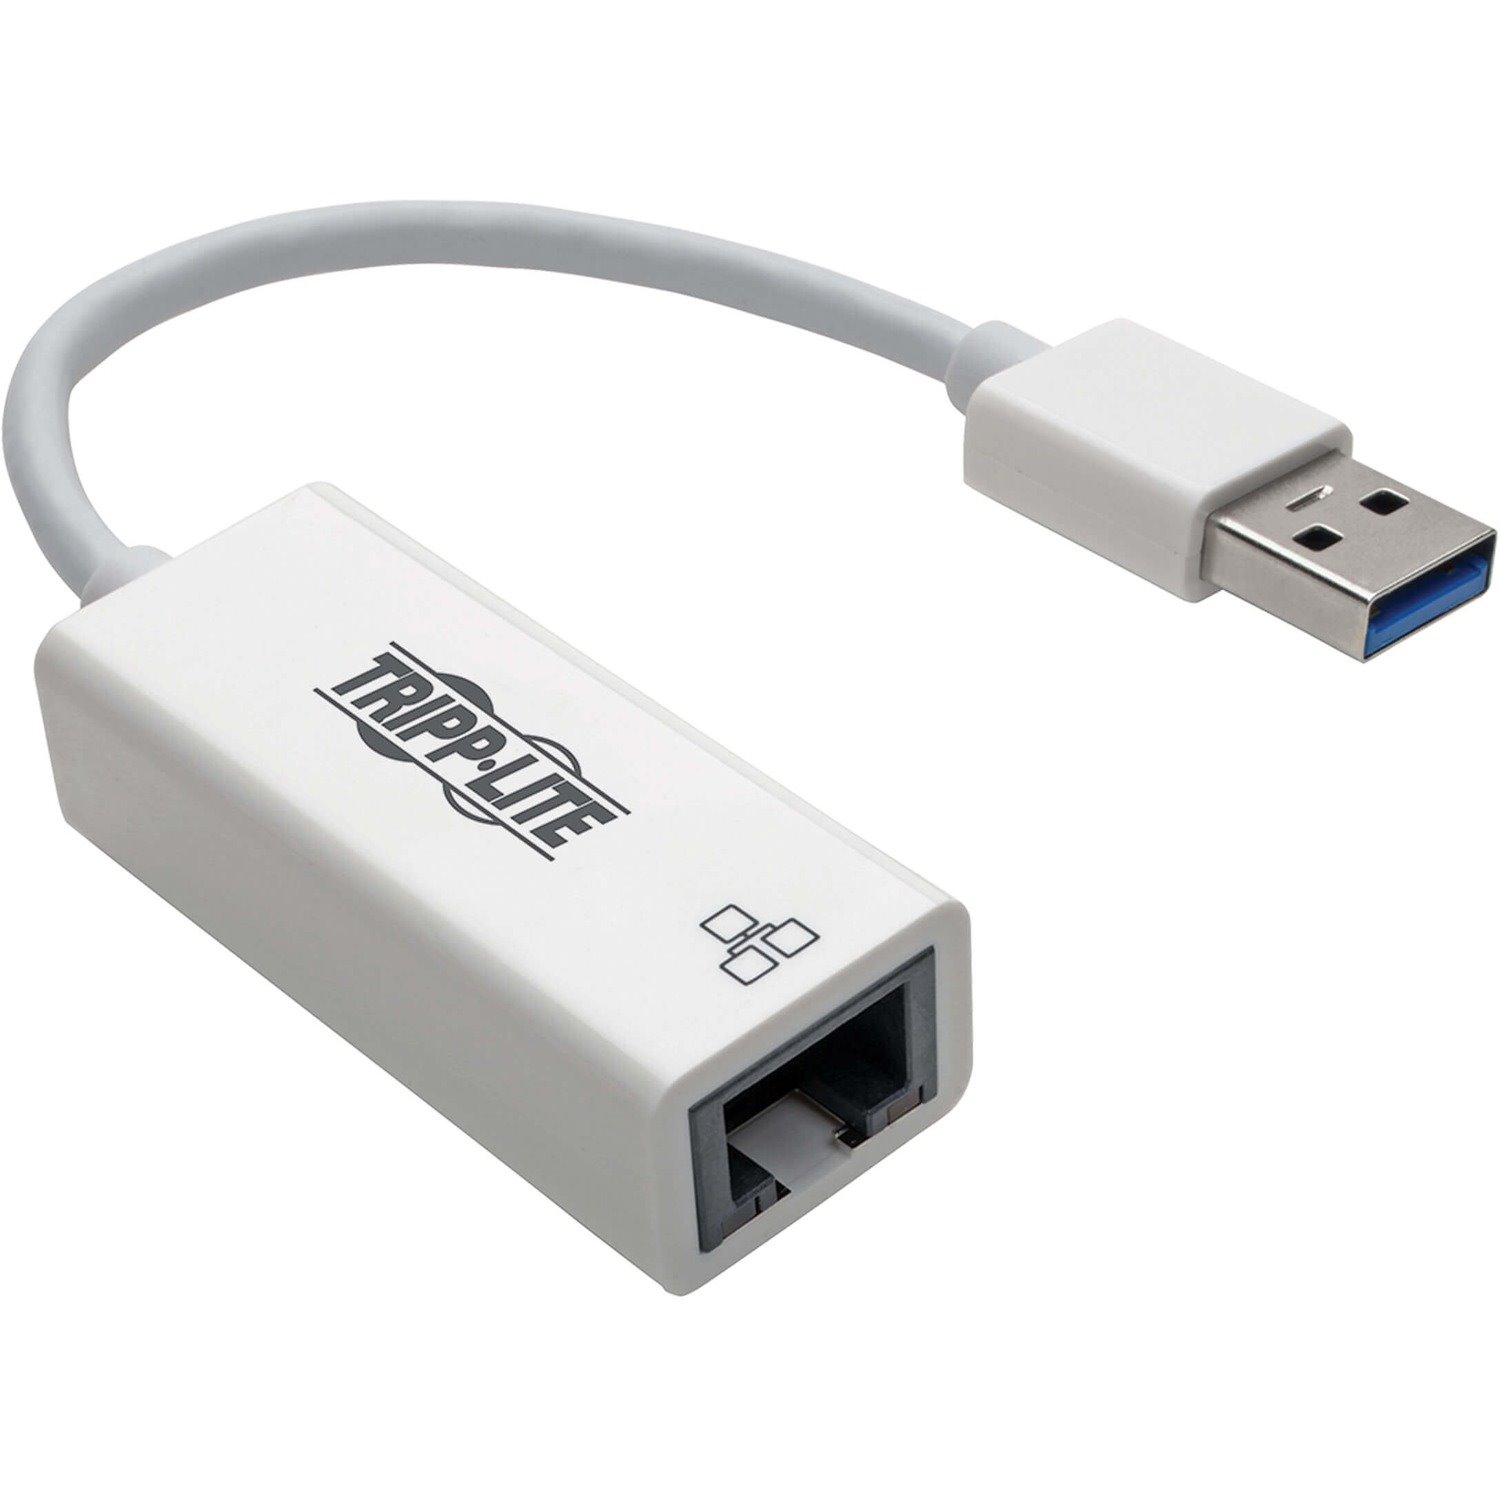 Eaton Tripp Lite Series USB 3.0 to Gigabit Ethernet NIC Network Adapter - 10/100/1000 Mbps, White